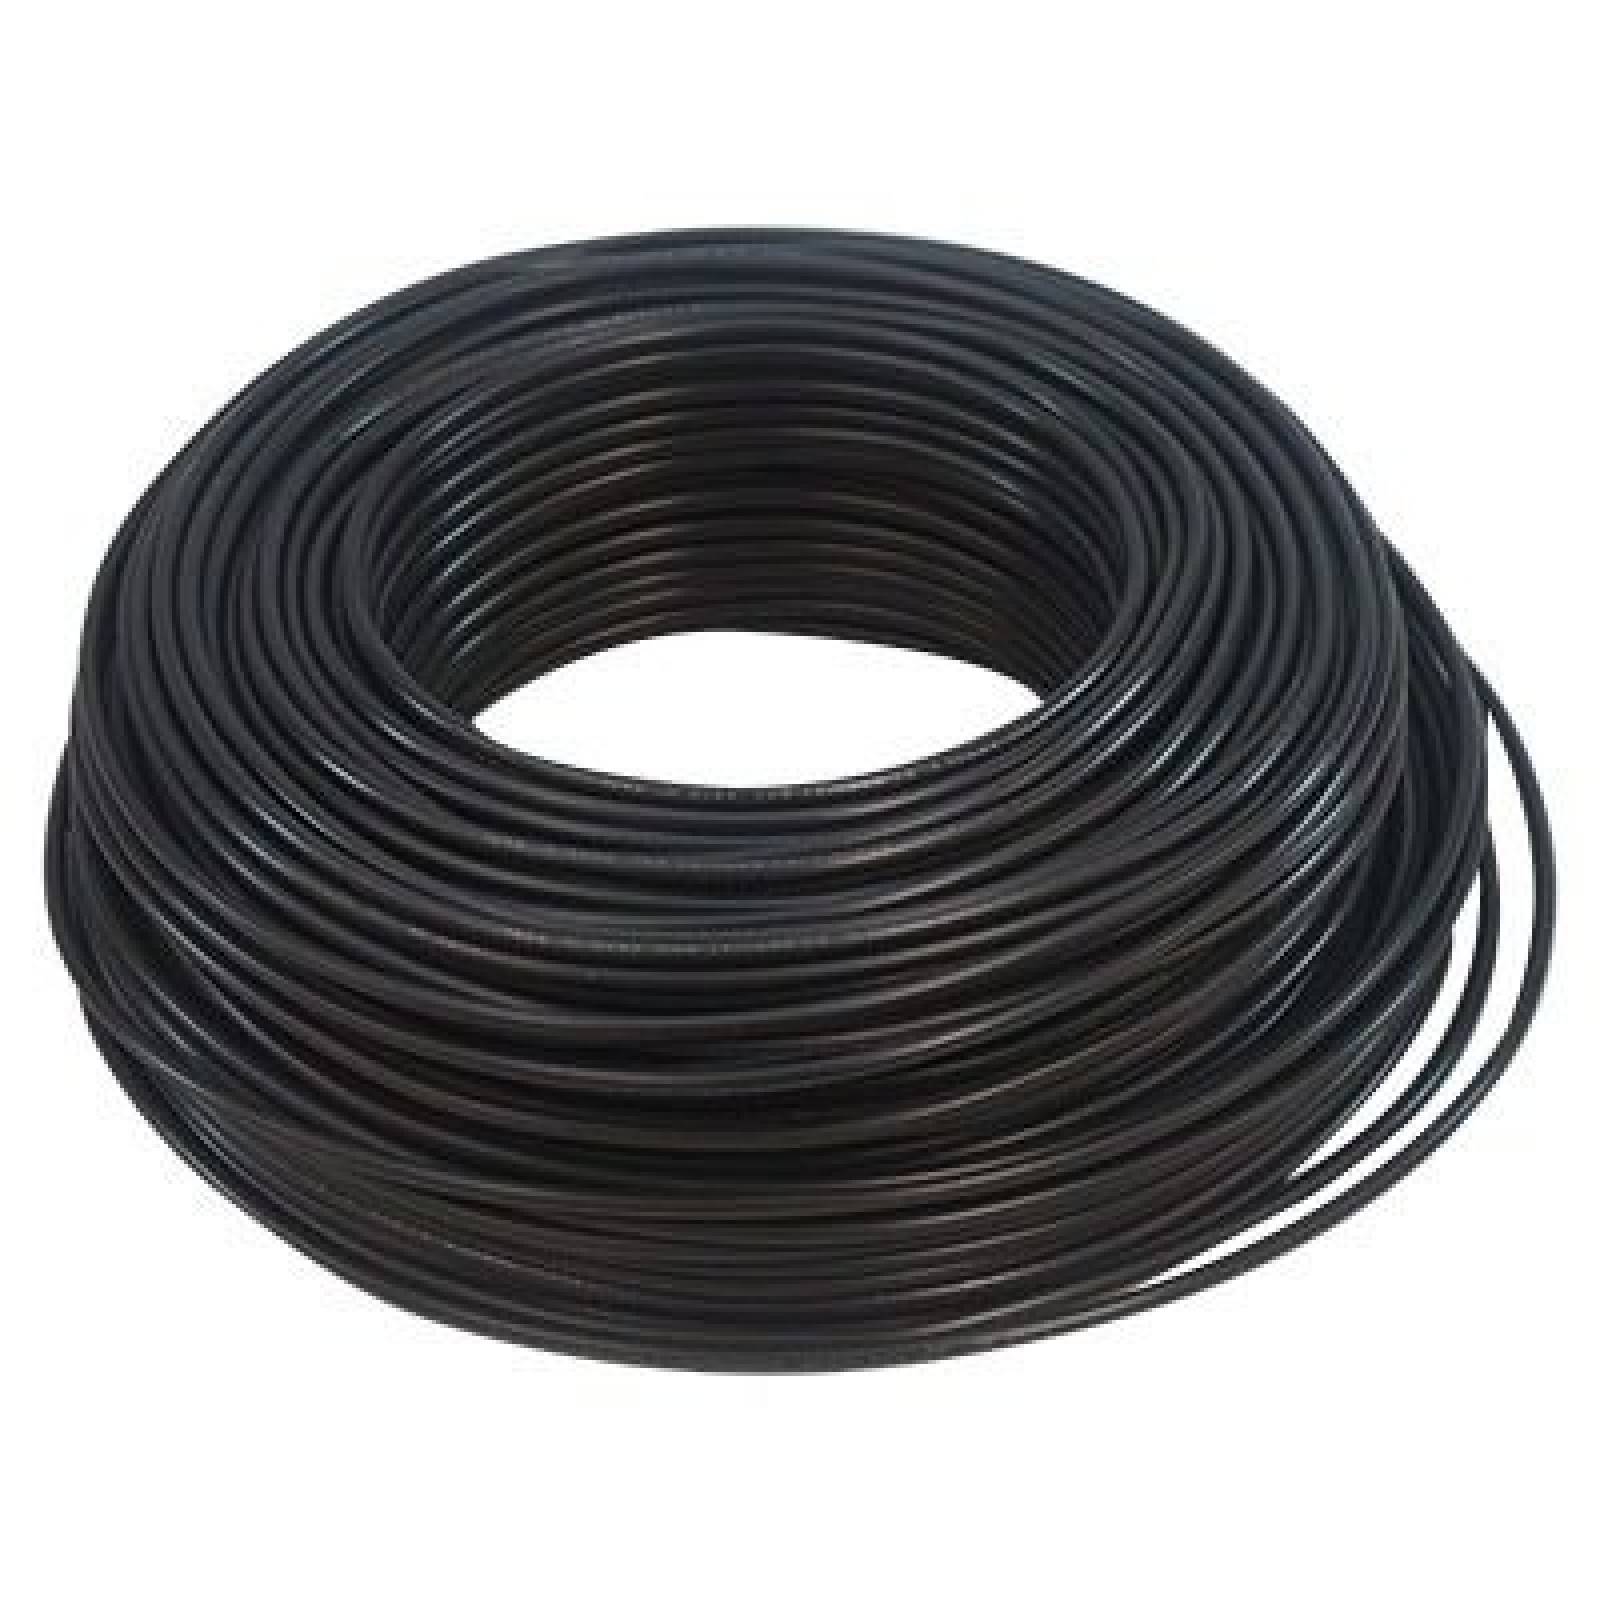 Cable Electrico Iusa Negro Thwc 10 125